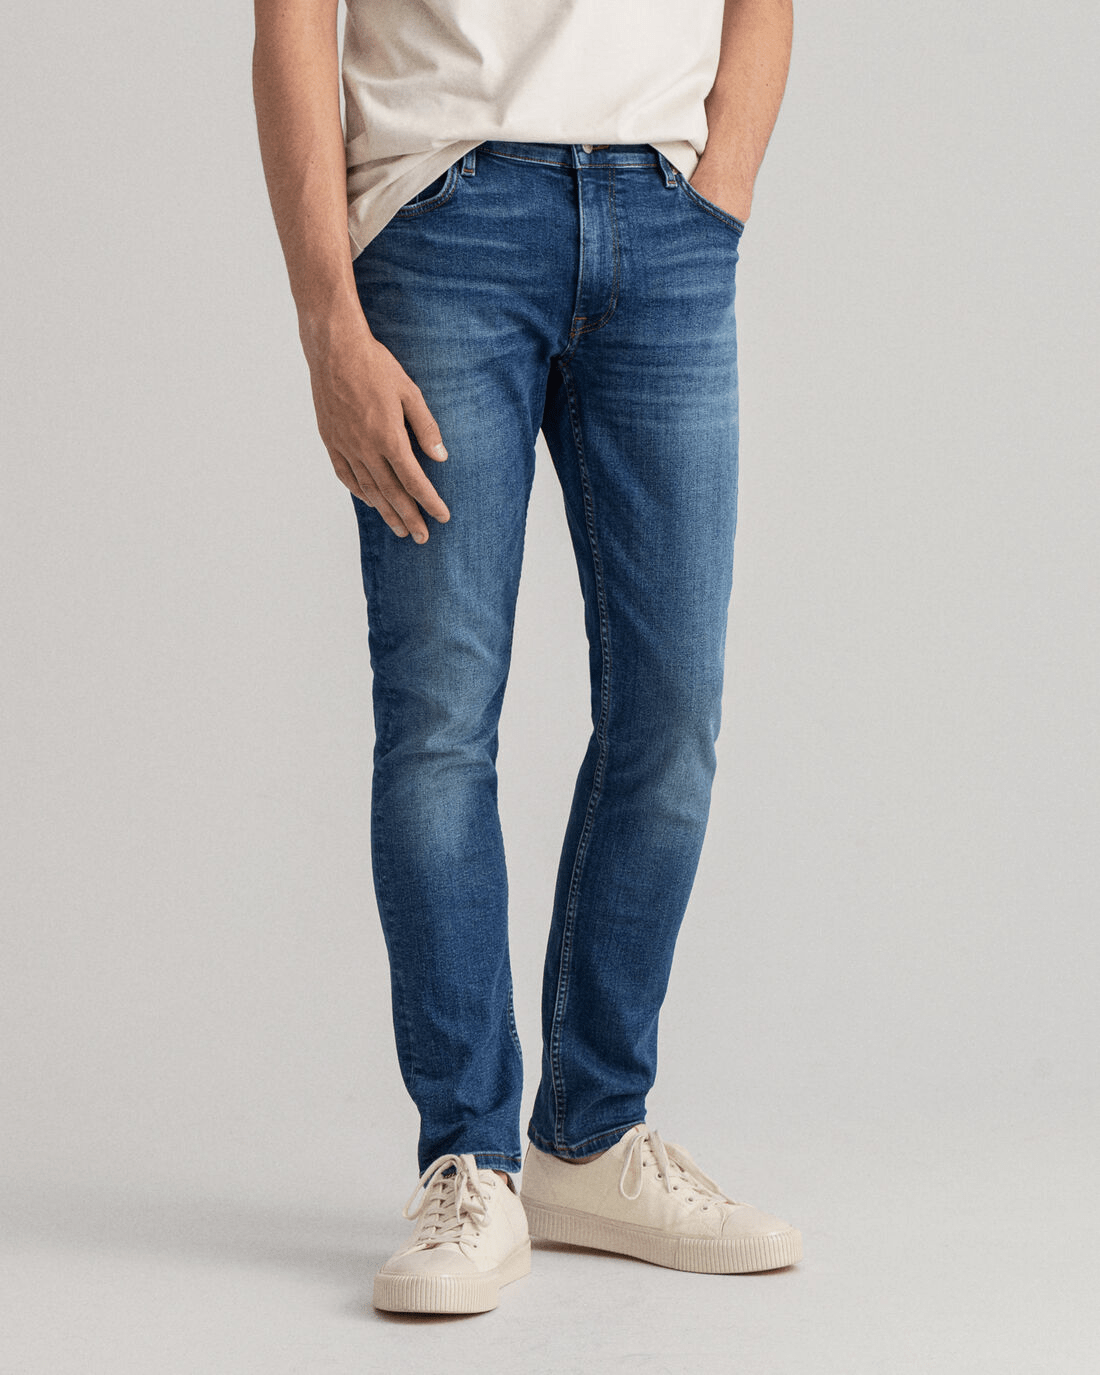 Jeans - Matt O'Brien Fashions